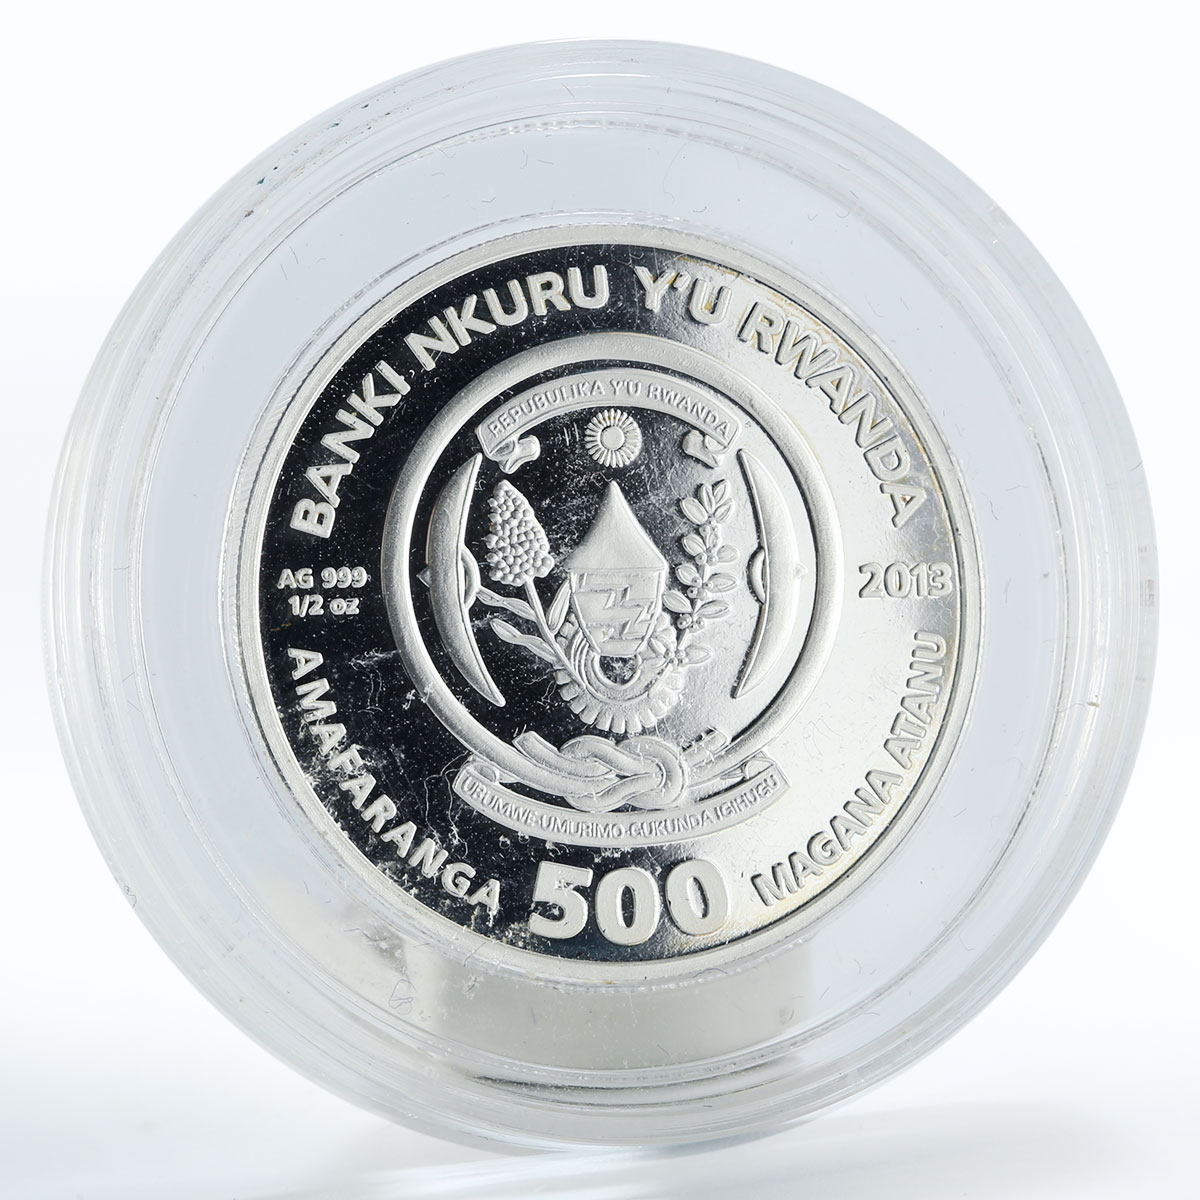 Rwanda 500 francs Seven Wonders Hanging Gardens of Babylon silver coin 2013